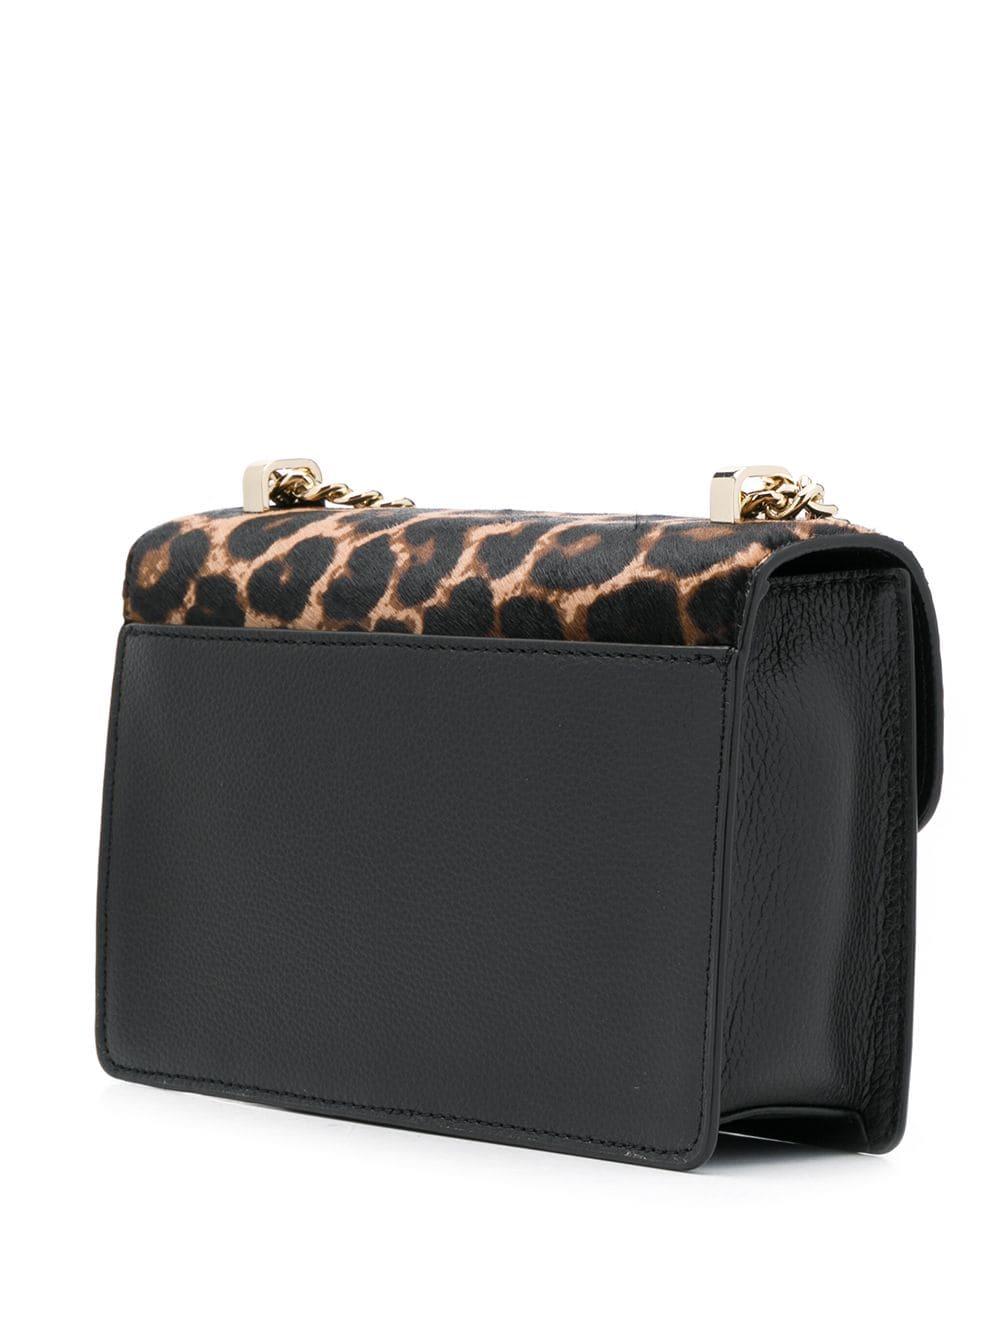 DKNY Leopard Print Body Bag Black | Lyst